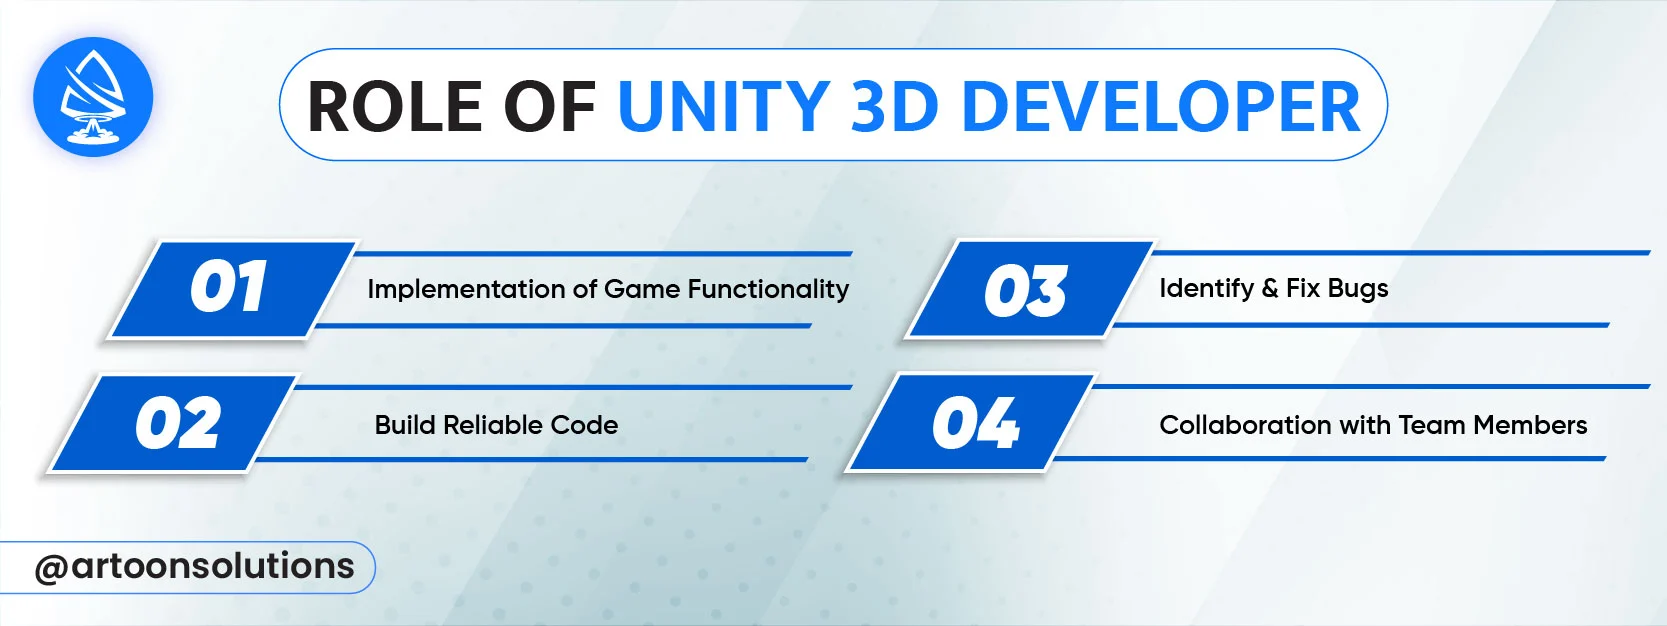 Role of Unity 3D Developer